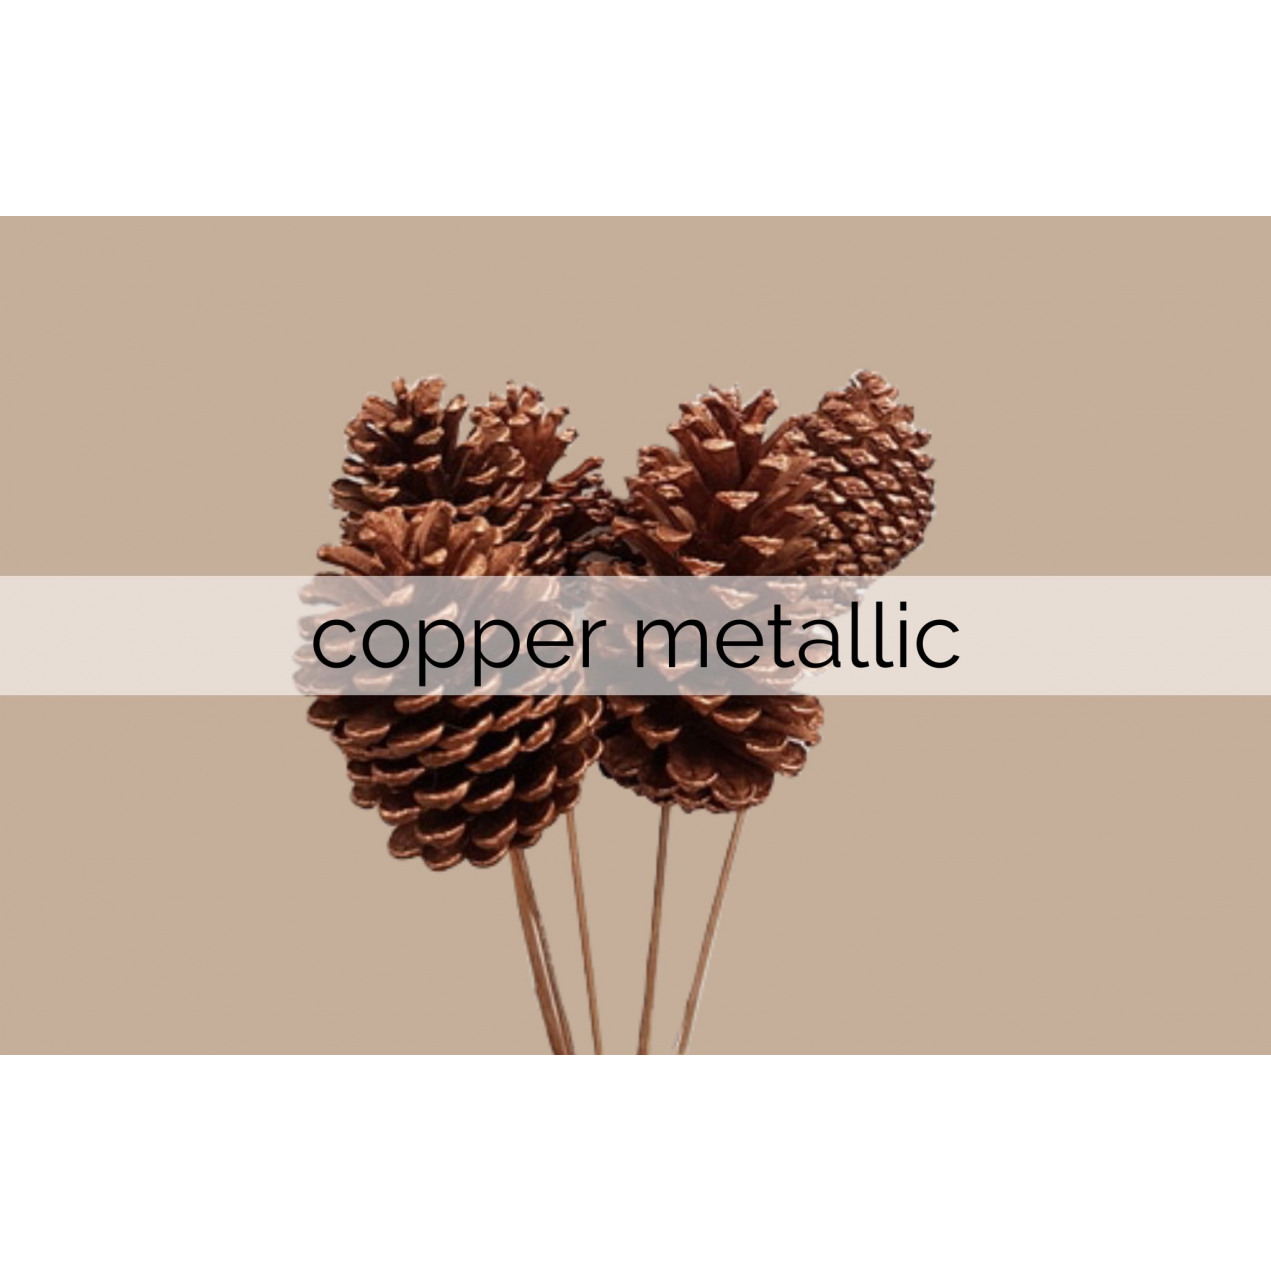 copper metallic